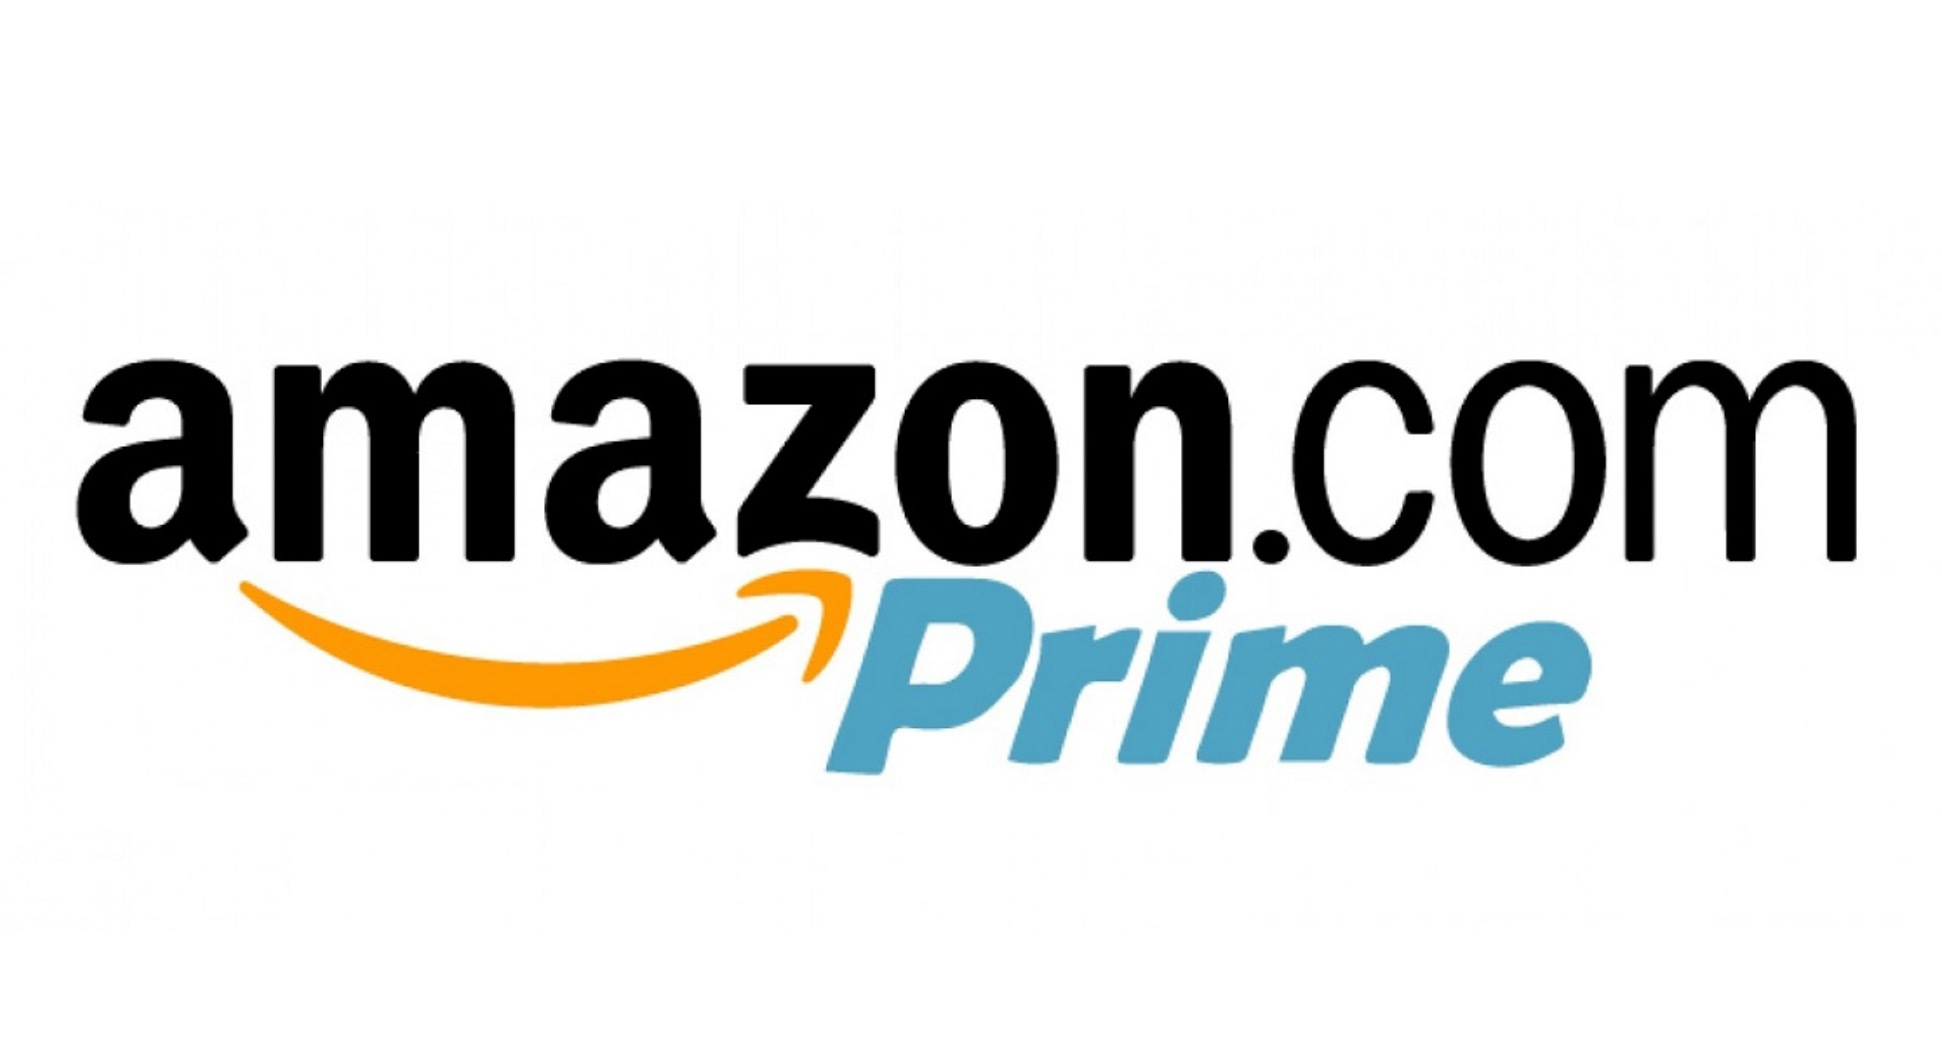 Gift Idea, Amazon Prime One-Year Membership, Labex Trade